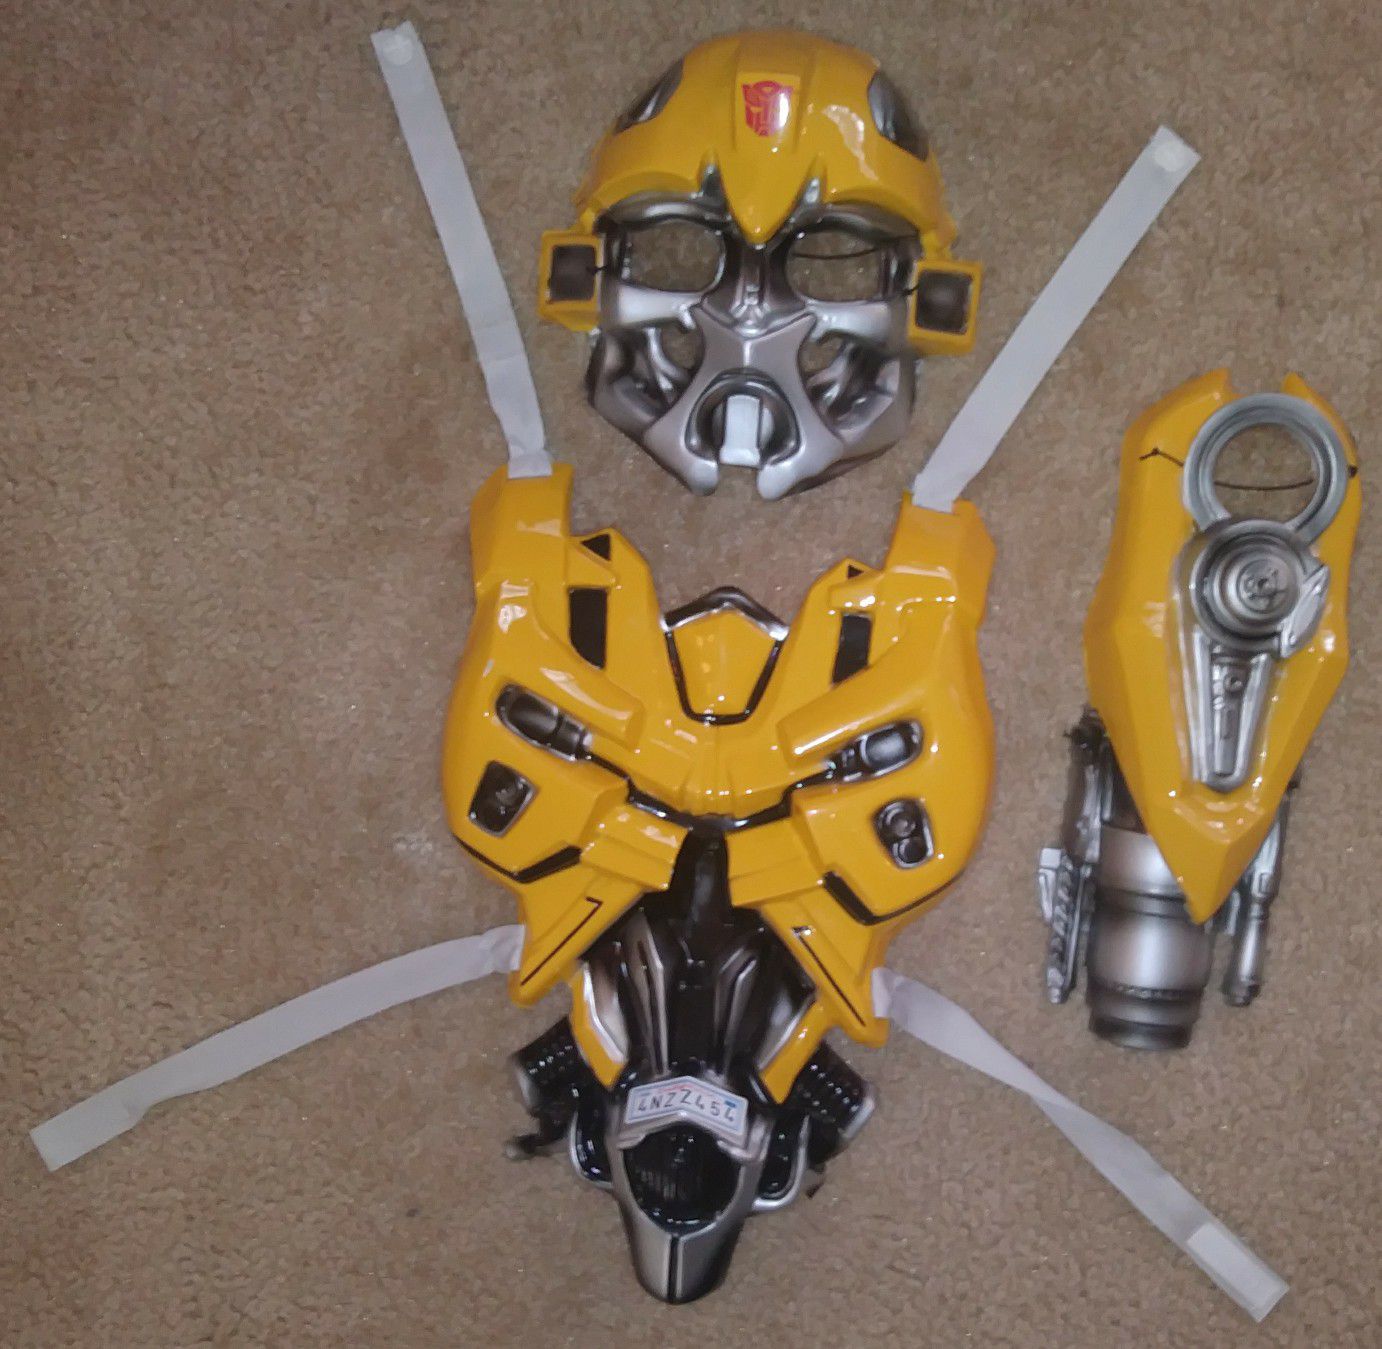 Bumblebee Transformer costume!!